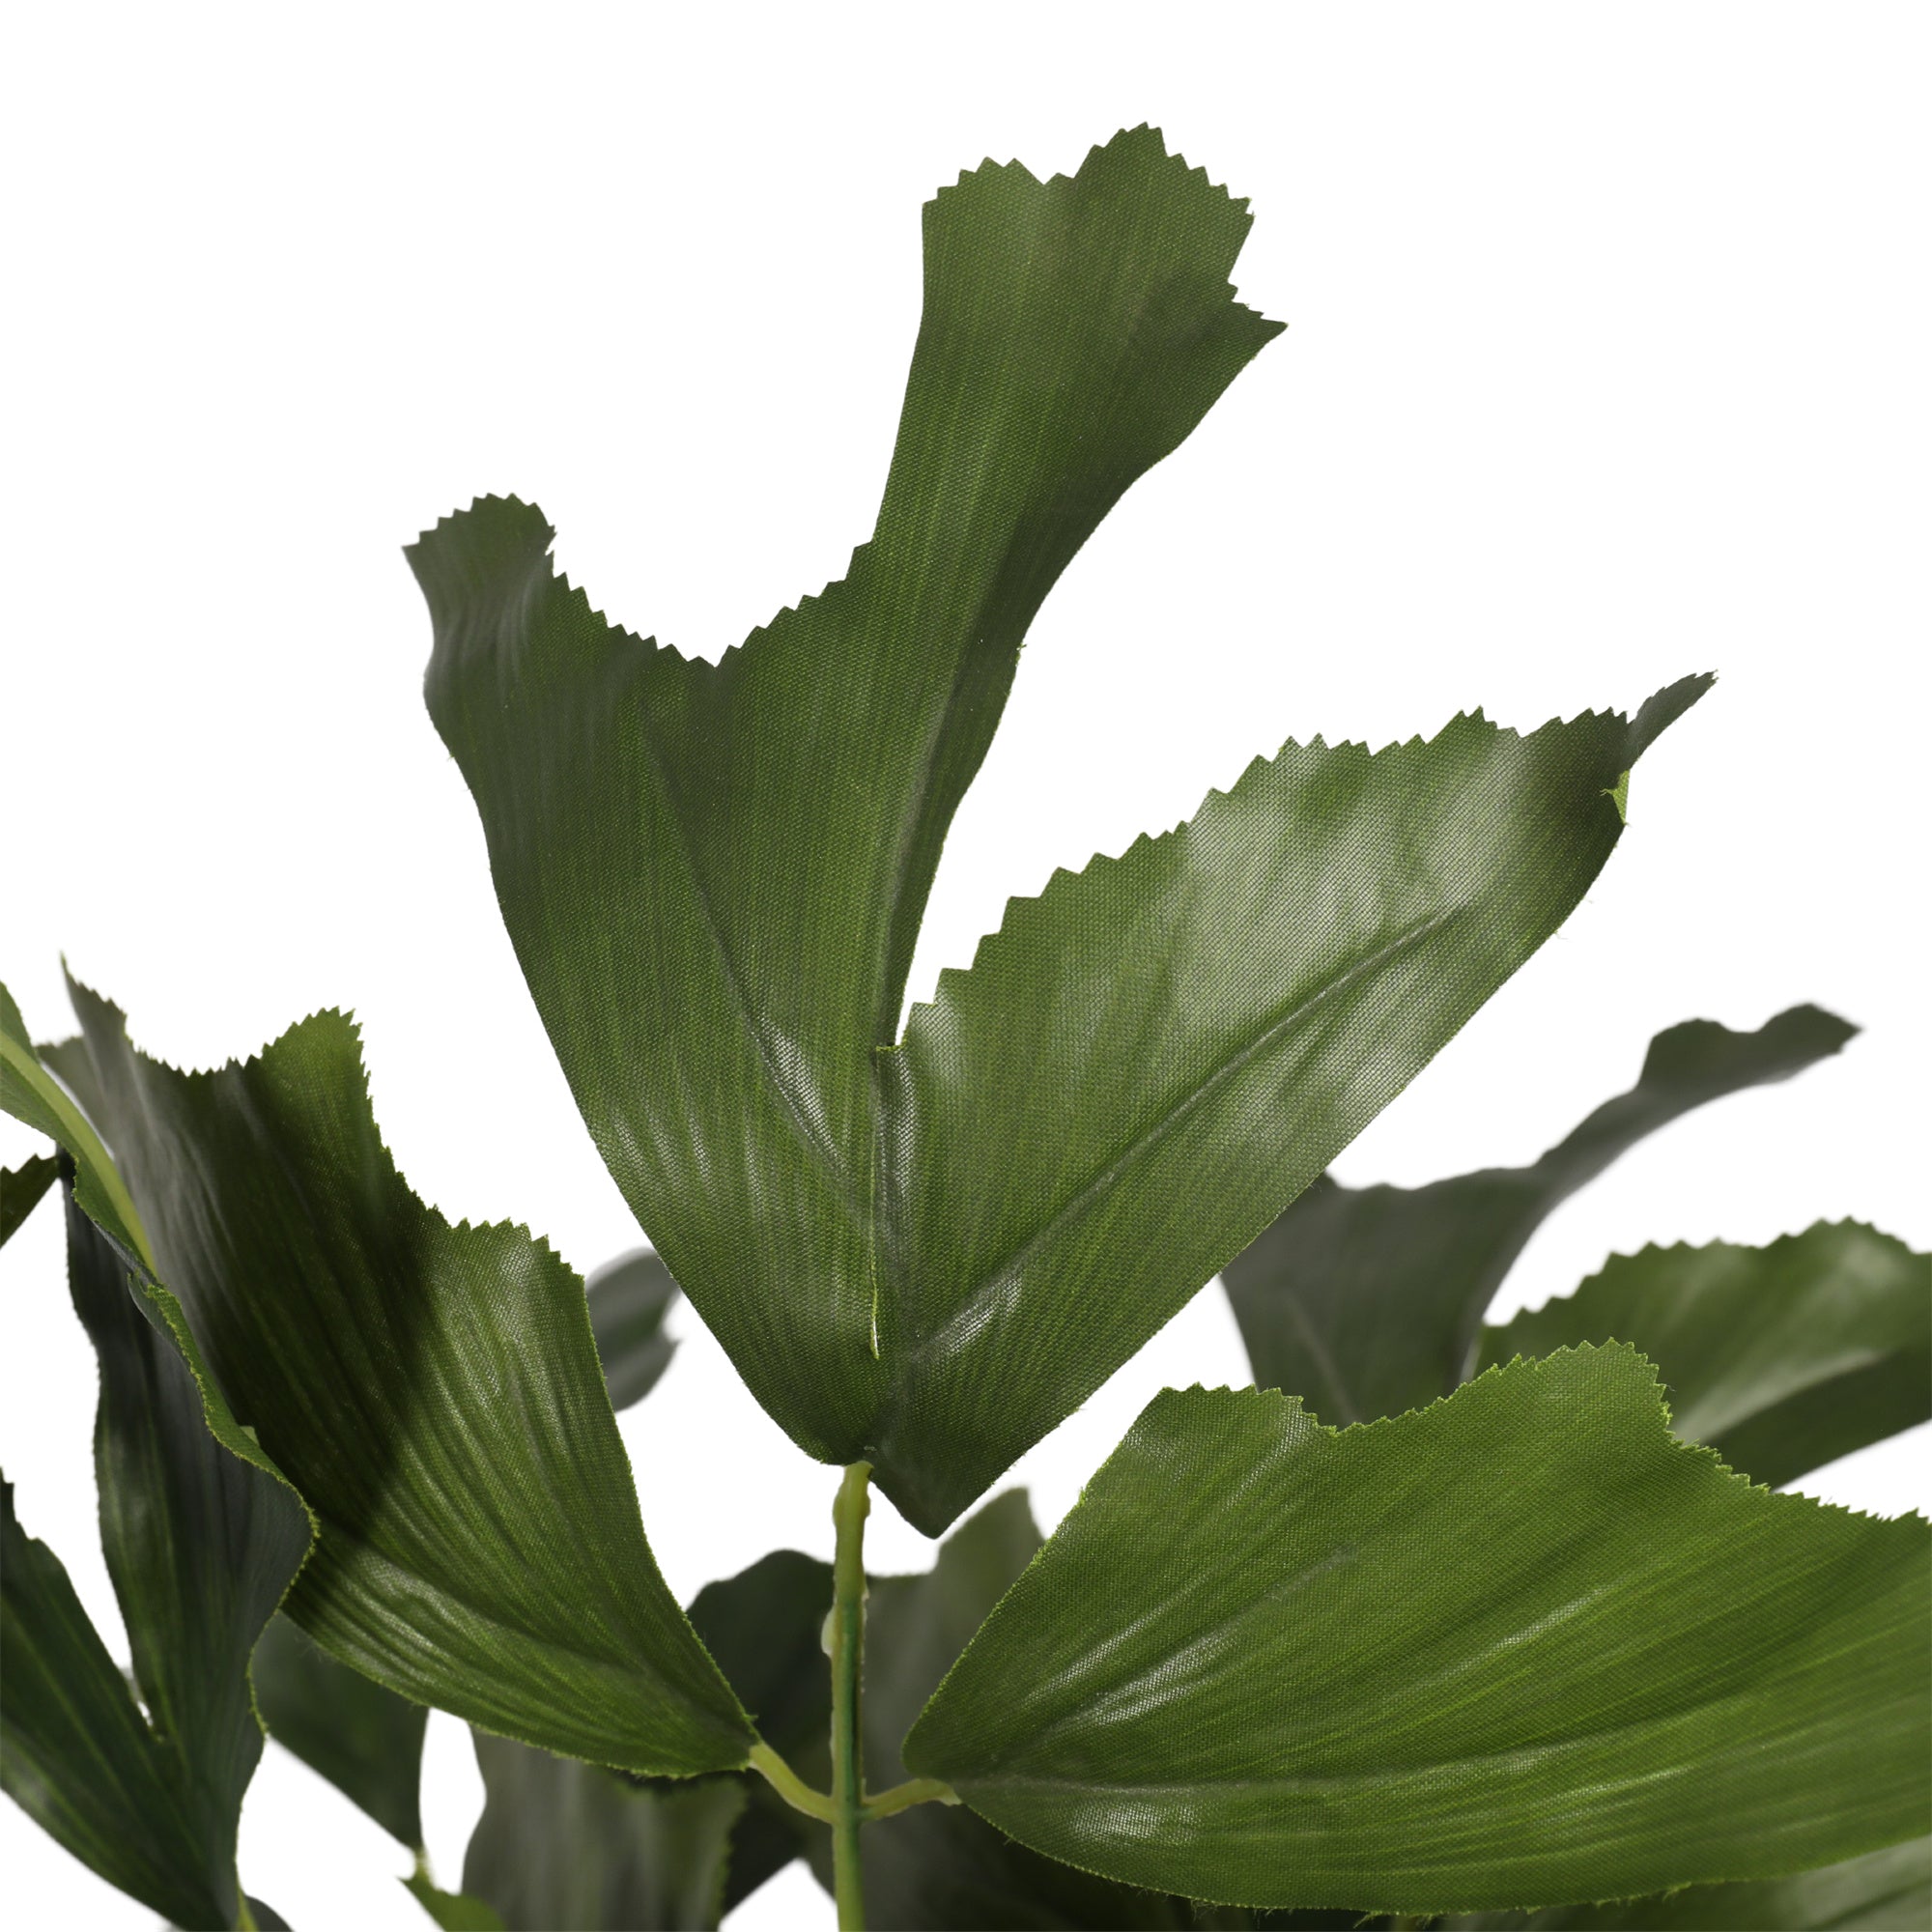 Fishtail palm